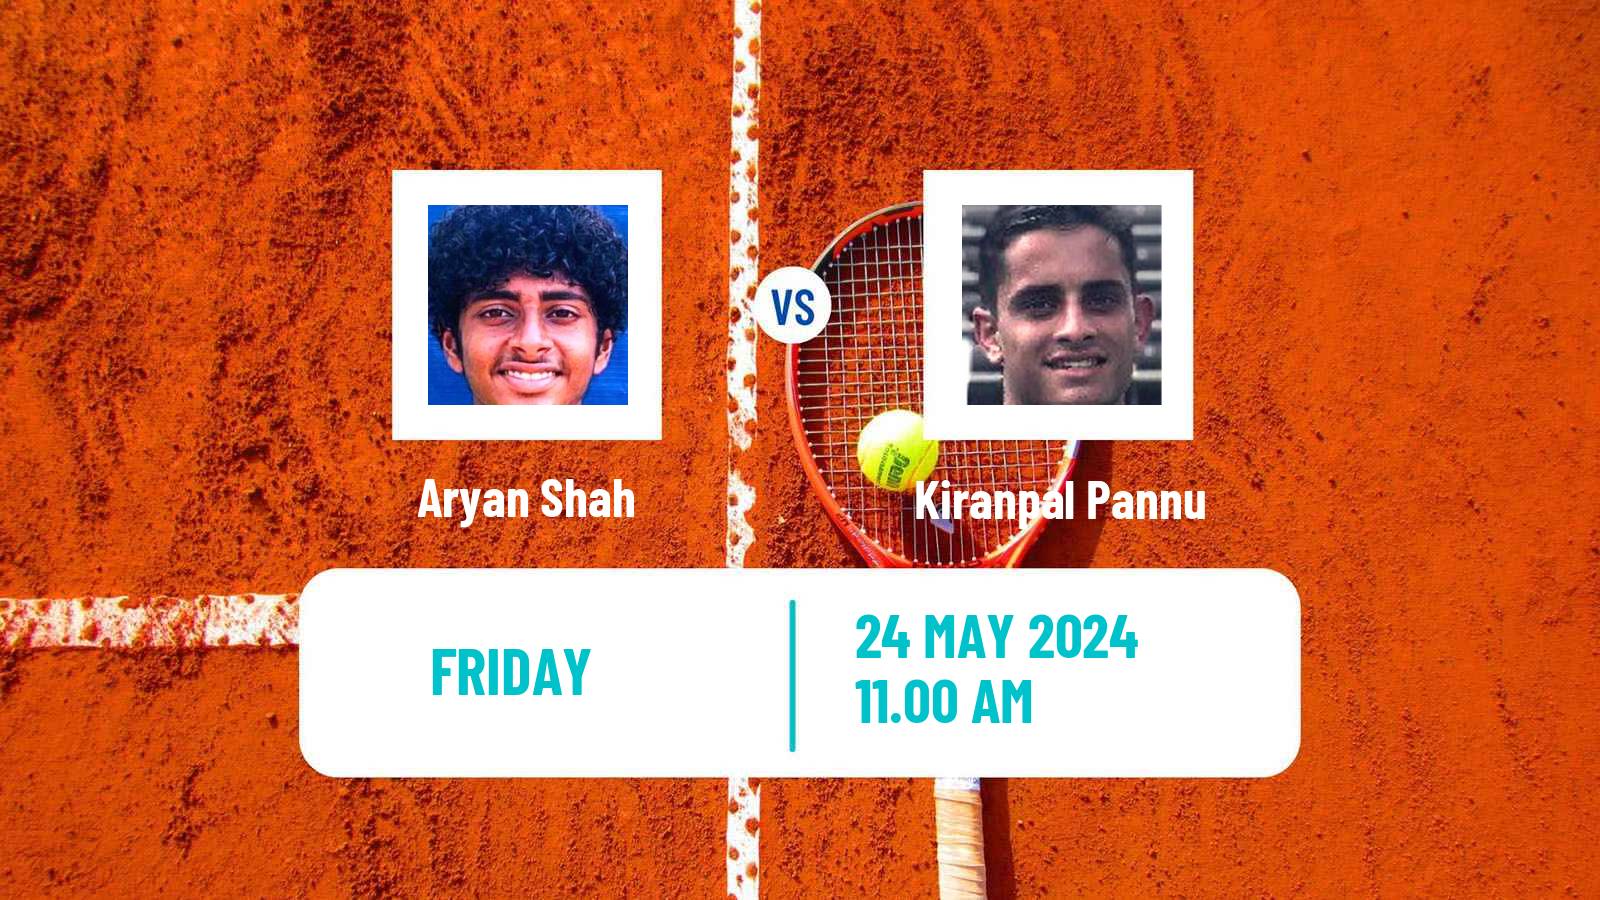 Tennis ITF M15 Kingston 2 Men Aryan Shah - Kiranpal Pannu